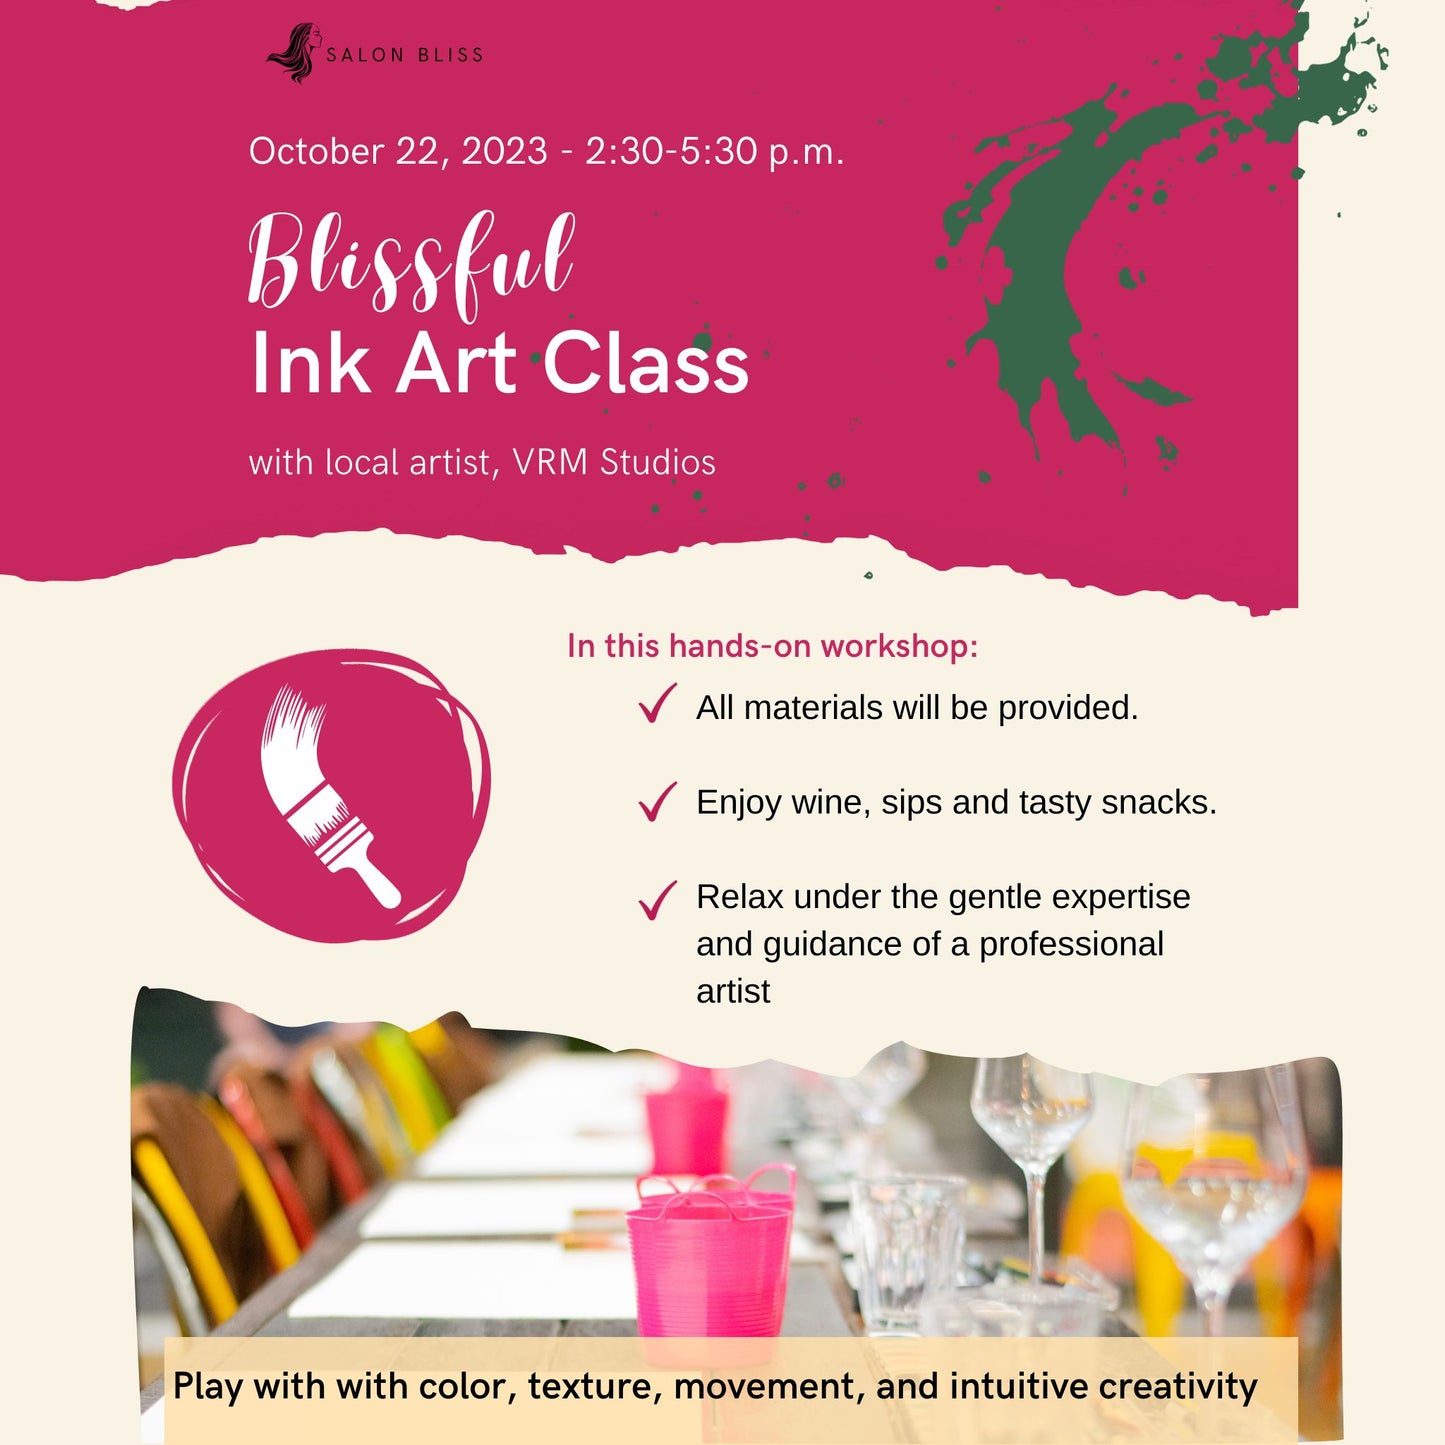 Blissful Ink Art Class - October 22, 2023 - 1 Seat Registration